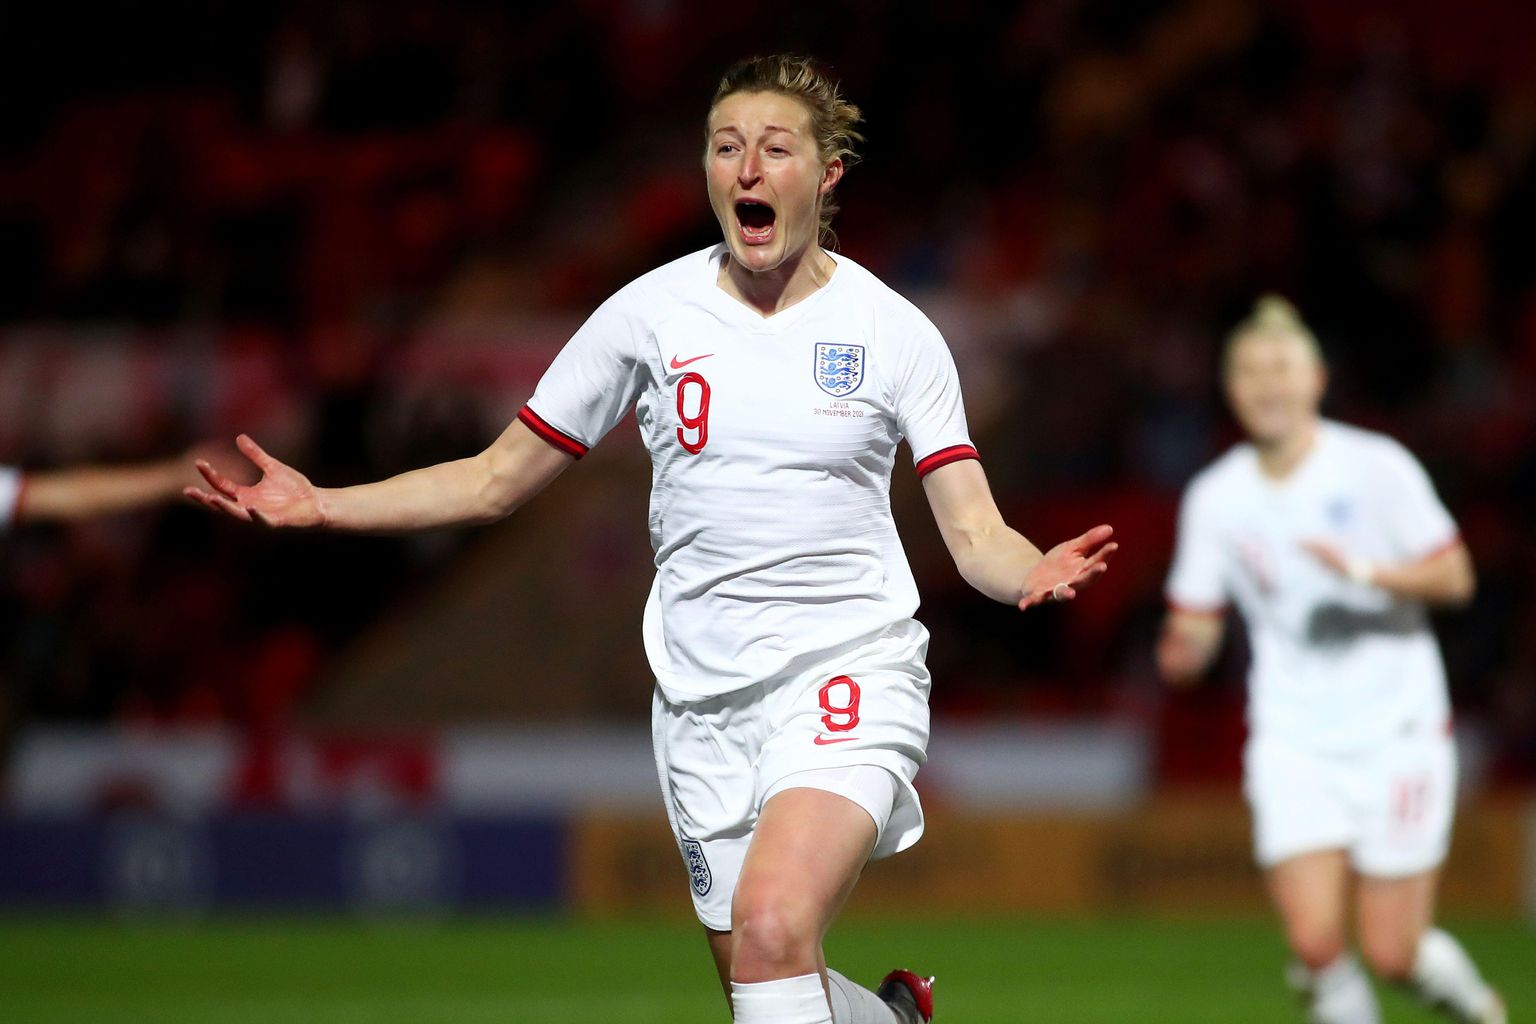 City's Ellen White becomes Lionesses' top goal scorer | News - Hits ...